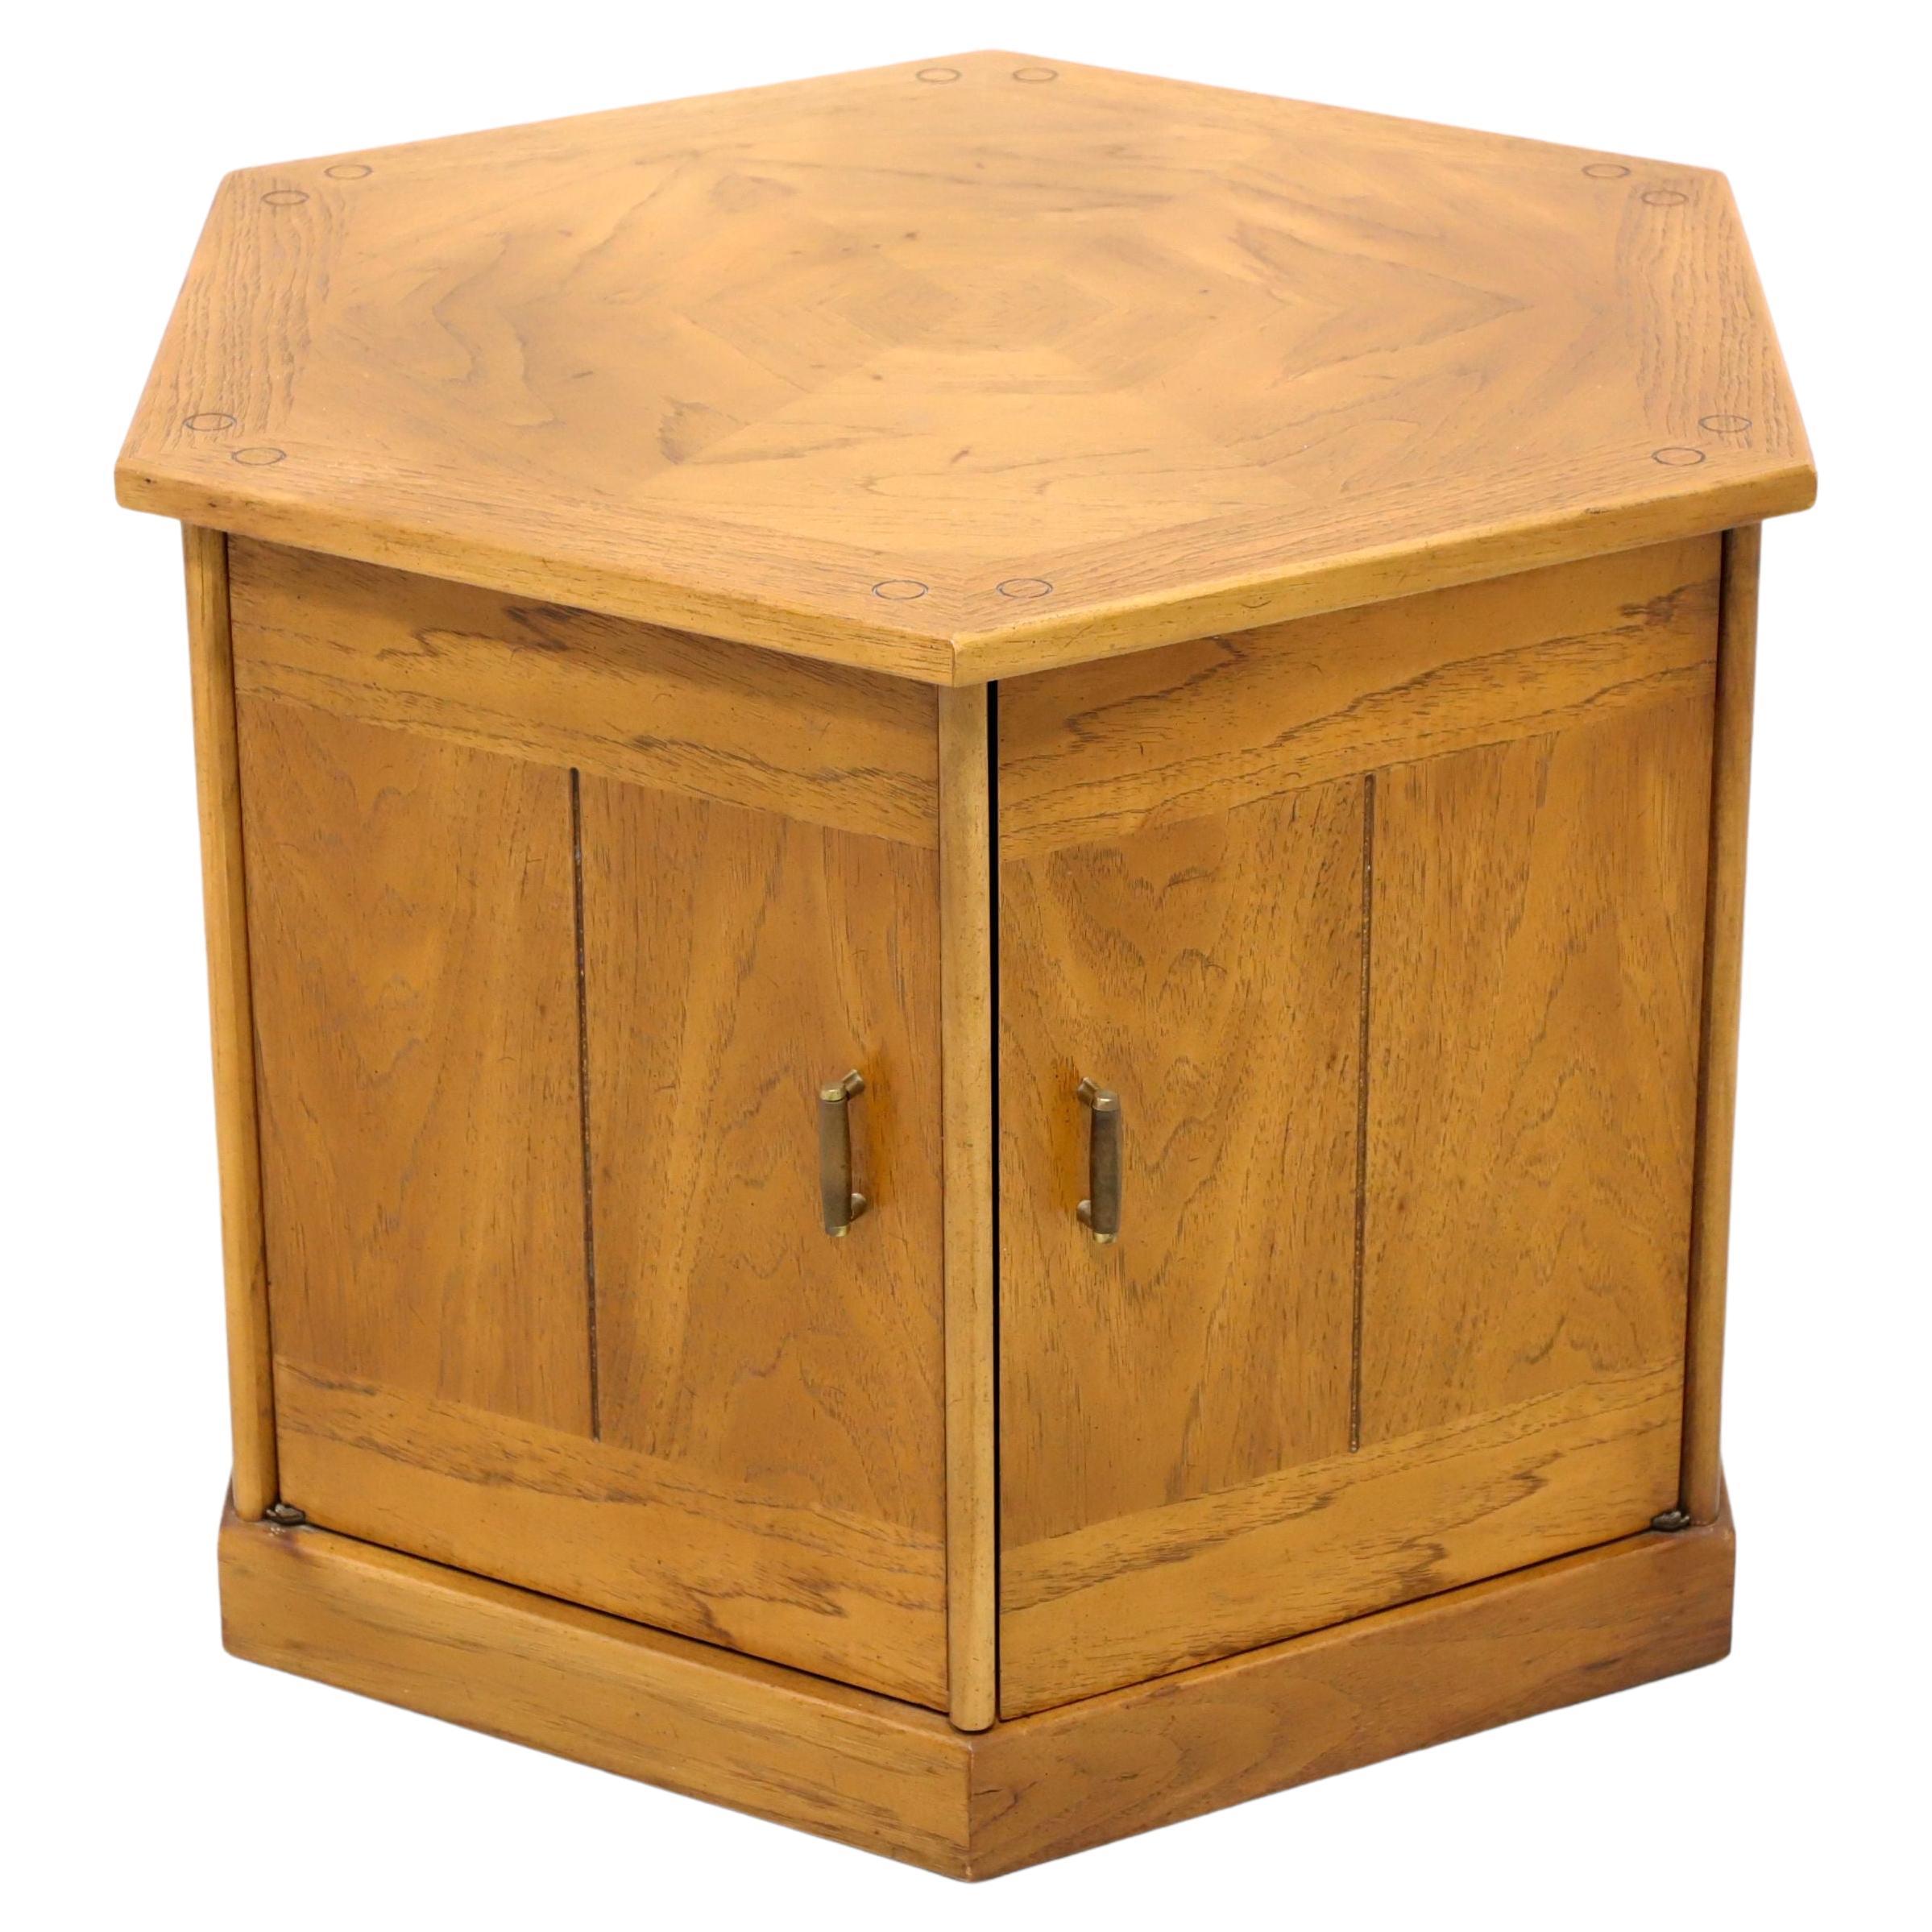 DREXEL Benchcraft Pecan Hexagonal Cabinet Accent Table For Sale